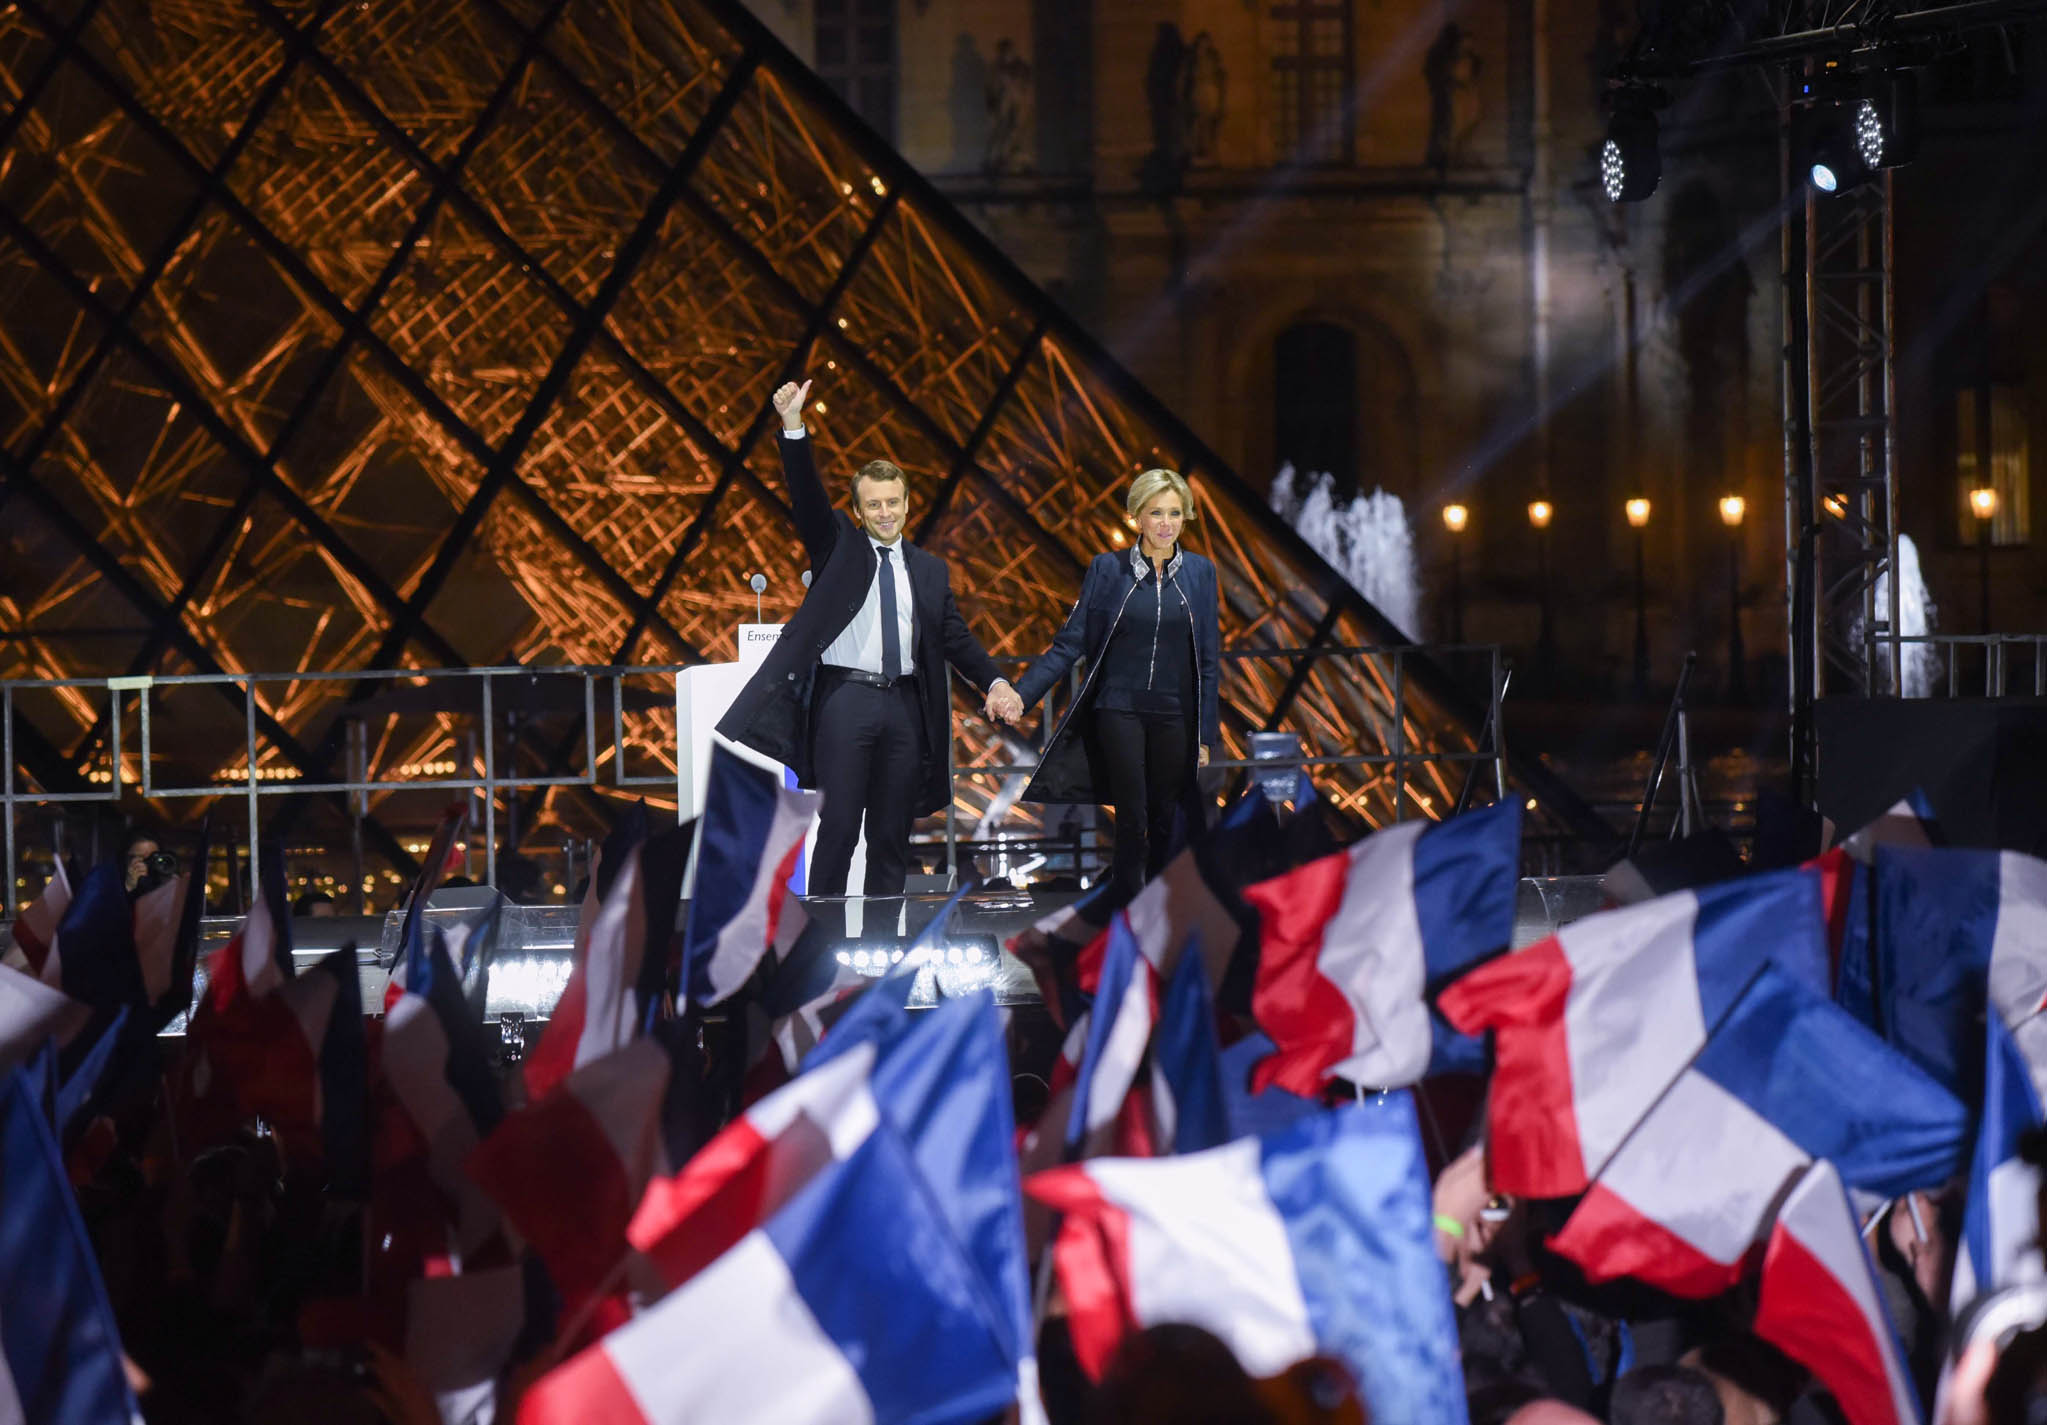 Macron victory speech in Louvres courtyard